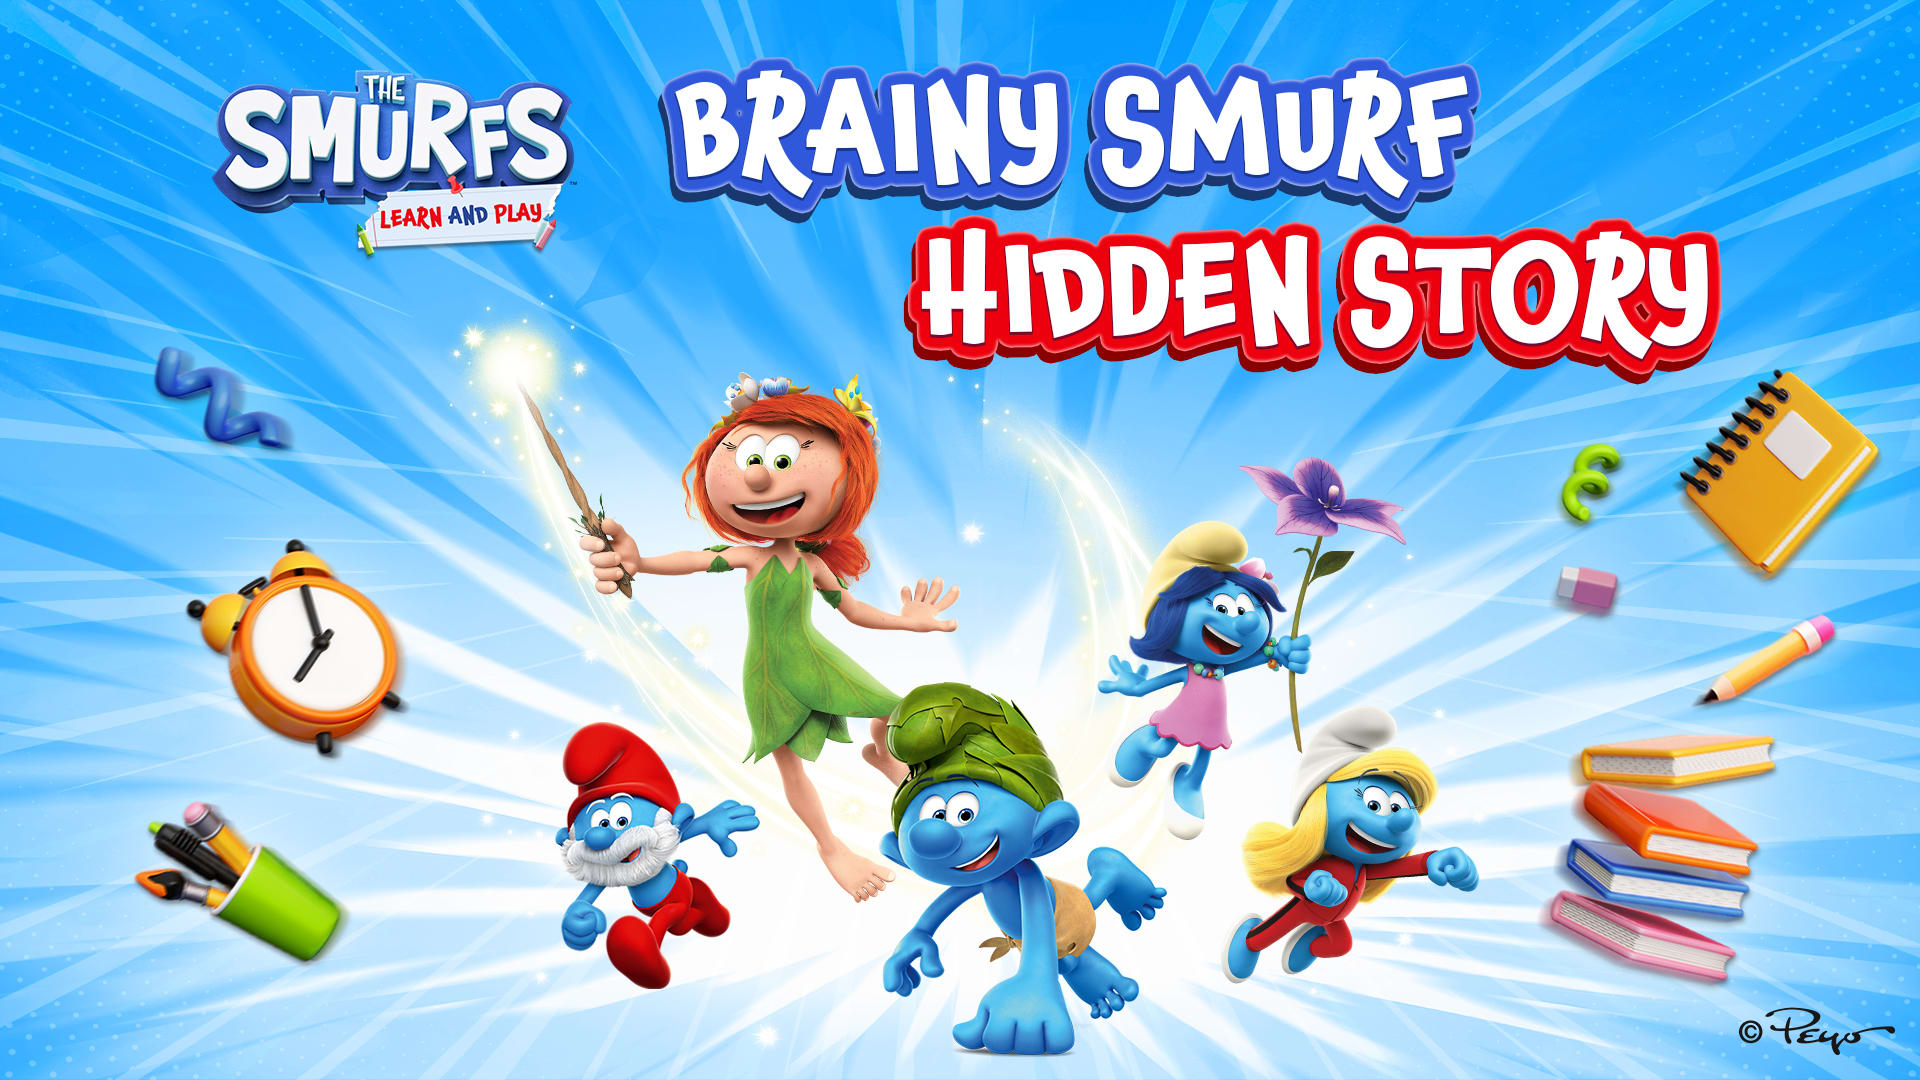 Brainy Smurf Hidden Story